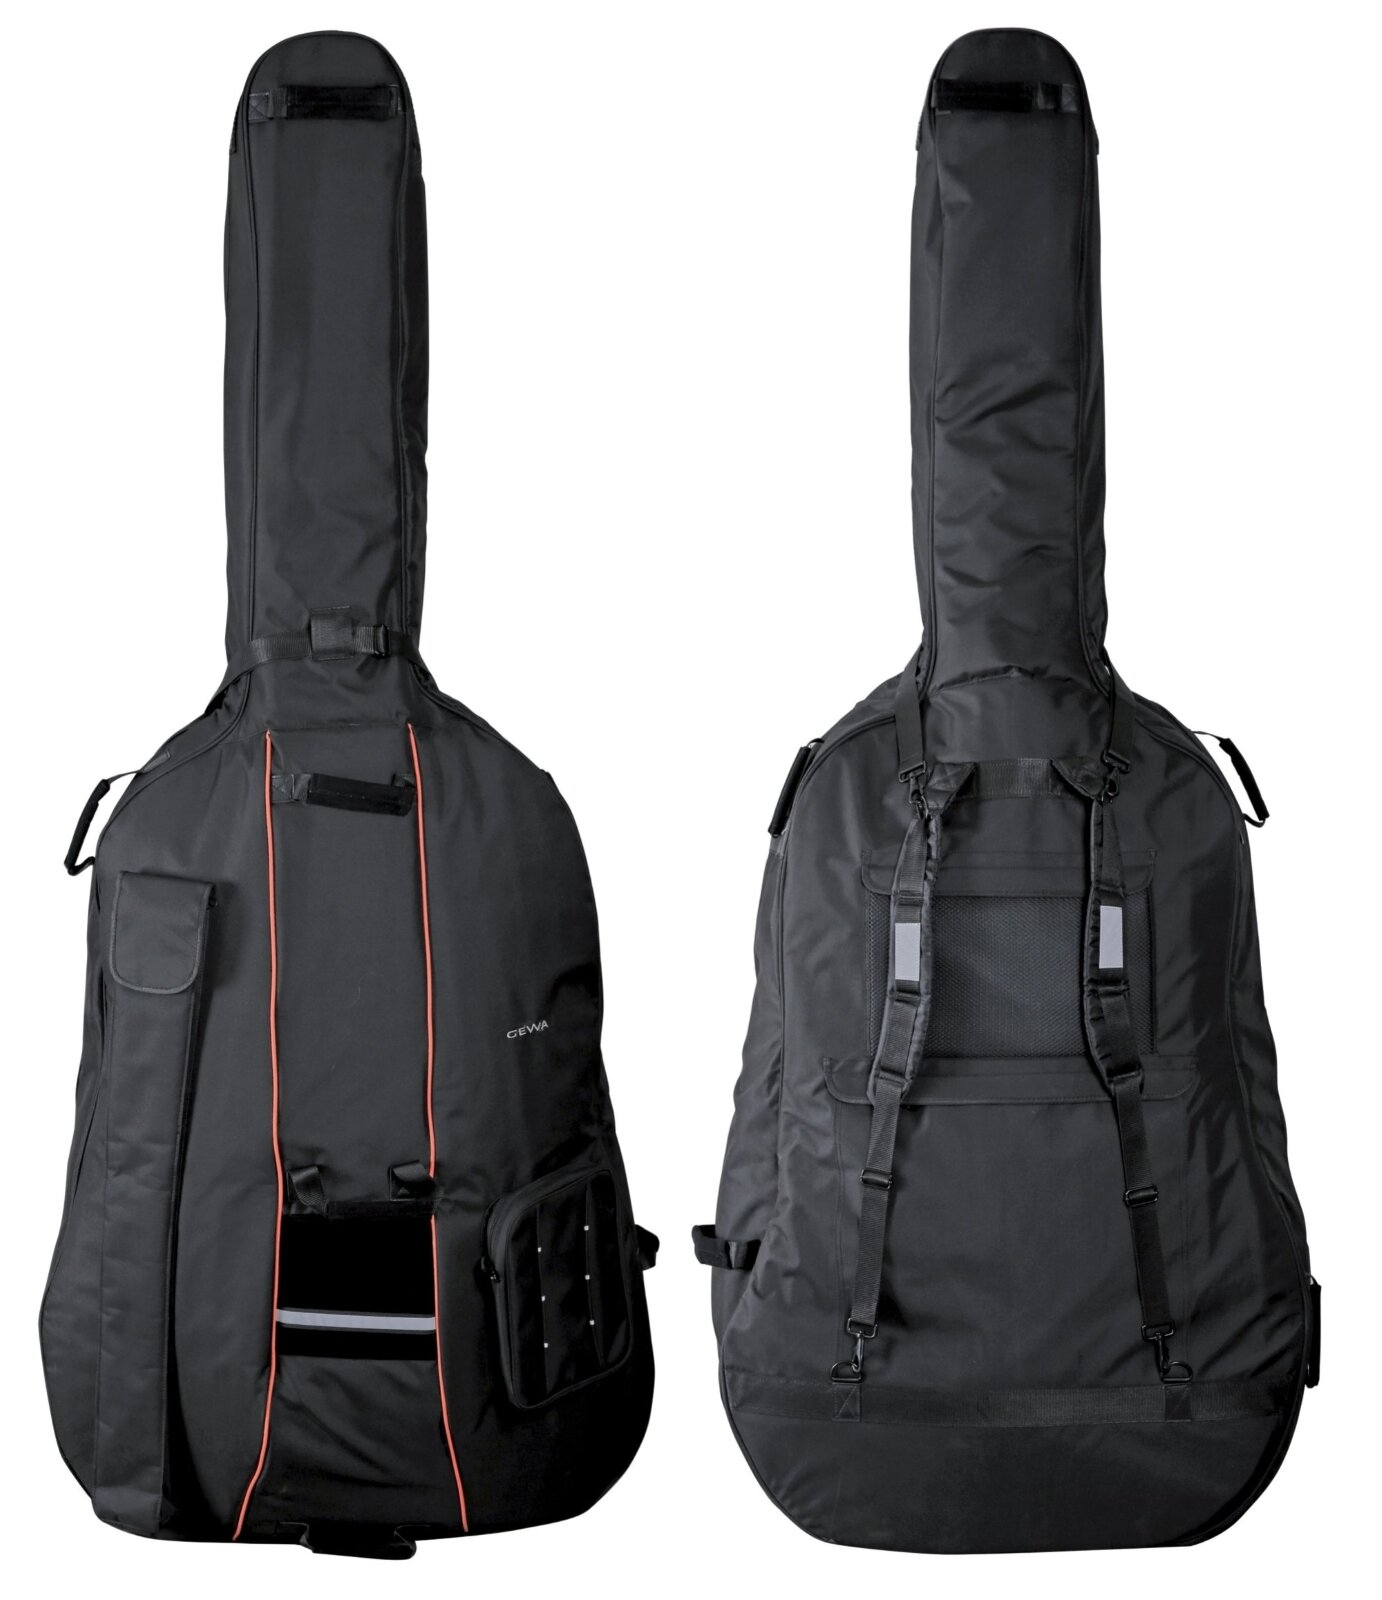 Gewa Gig-Bag Premium Double Bass Bag : photo 1